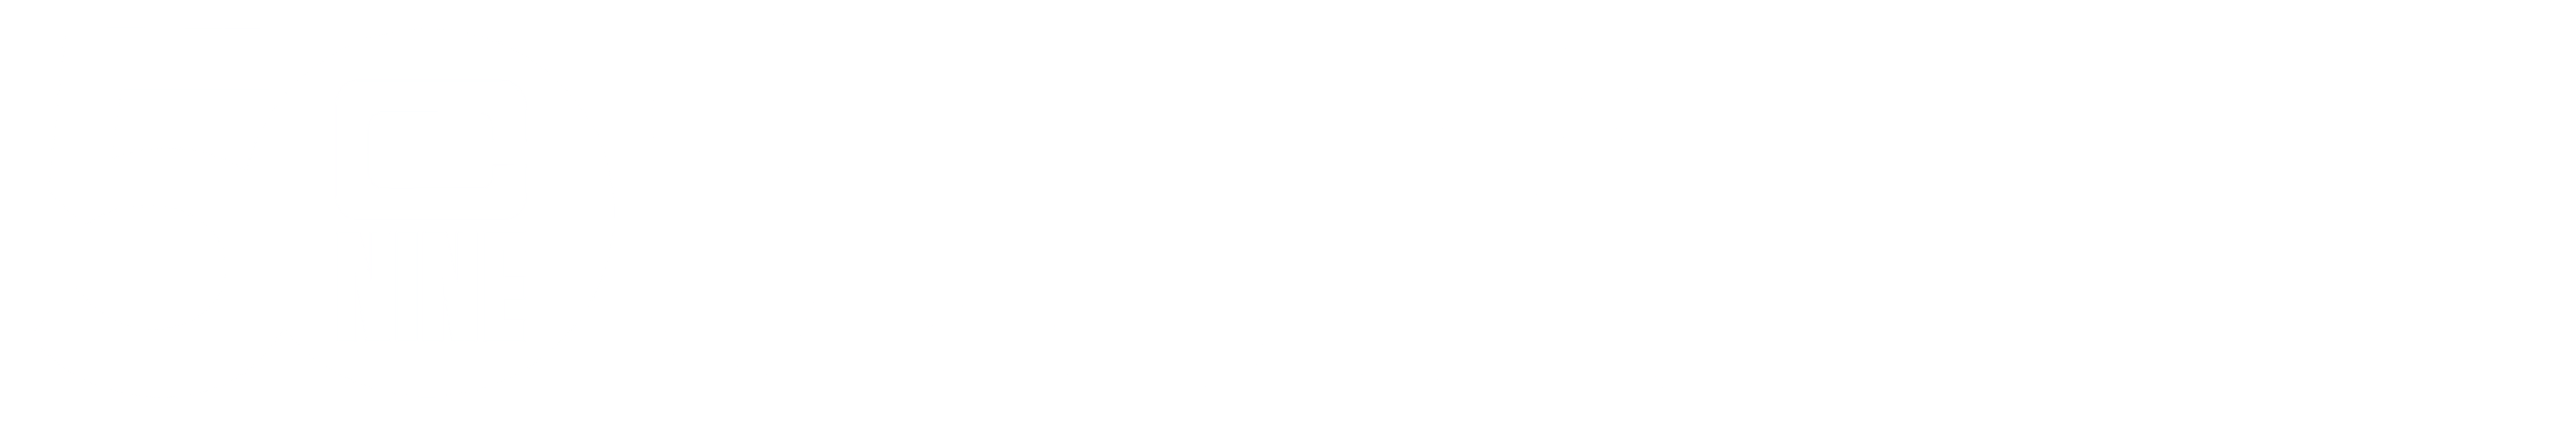 Central Nine Career Center